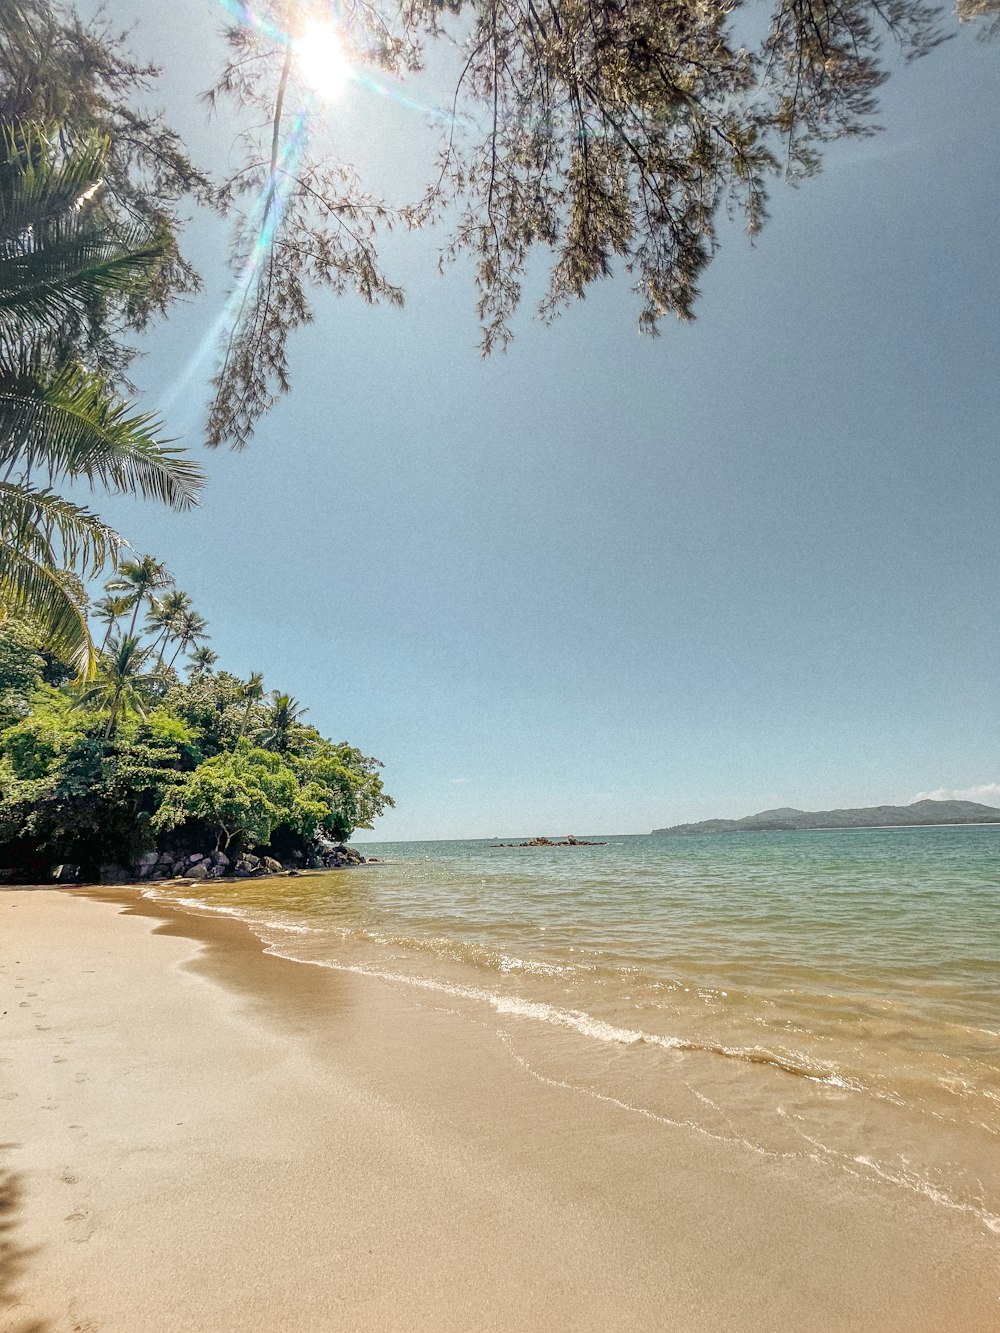 a sandy beach next to the ocean under a tree